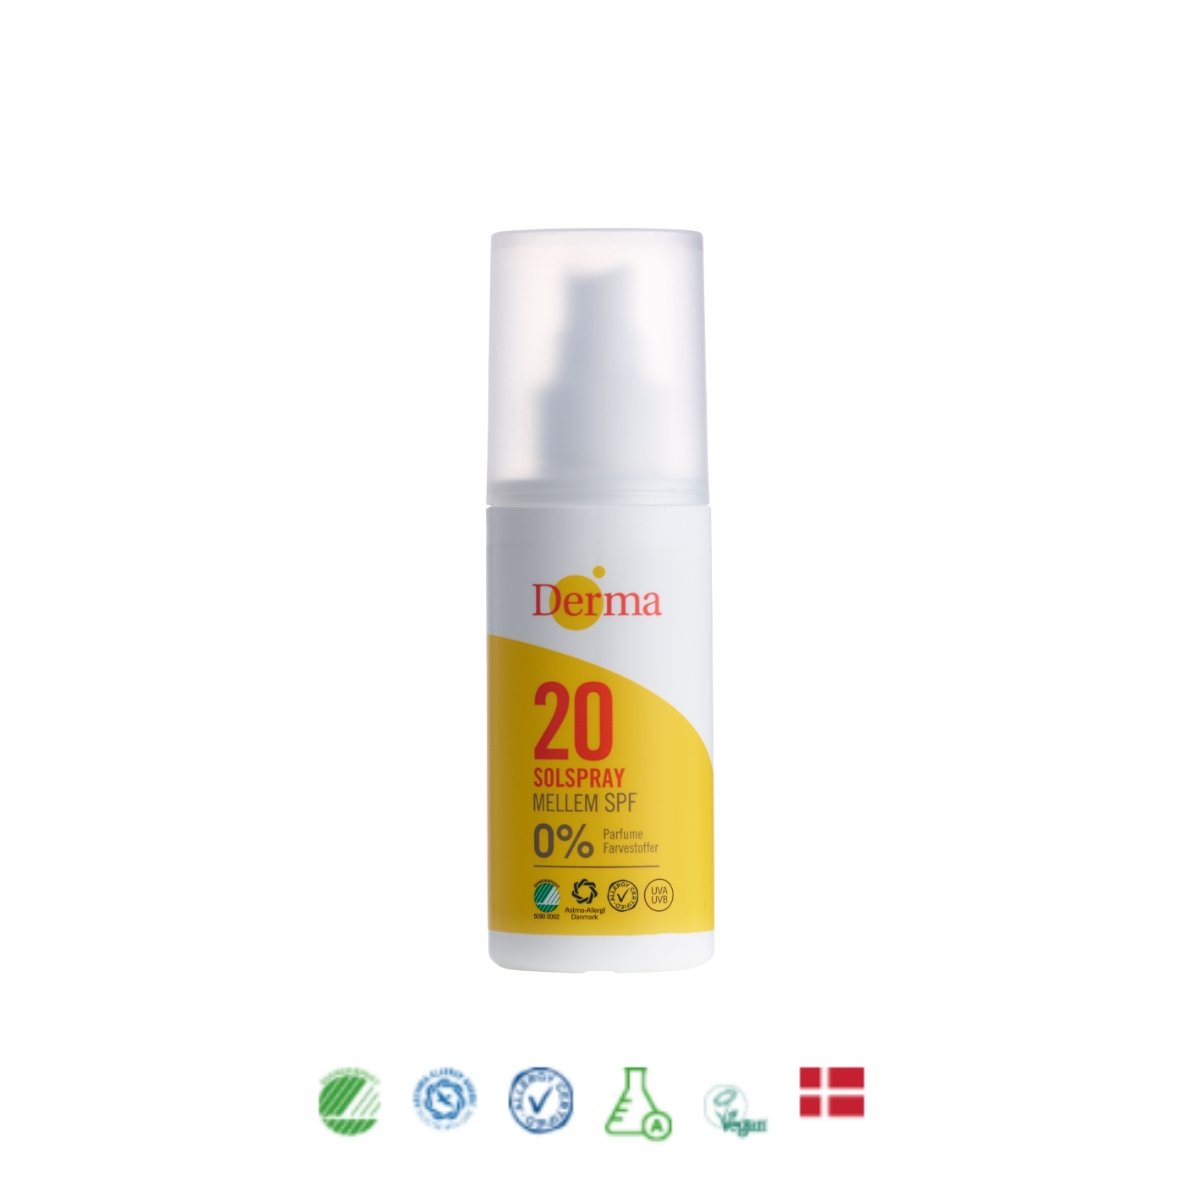 Derma SUN Solspray SPF20, 150 ml Sol Derma   